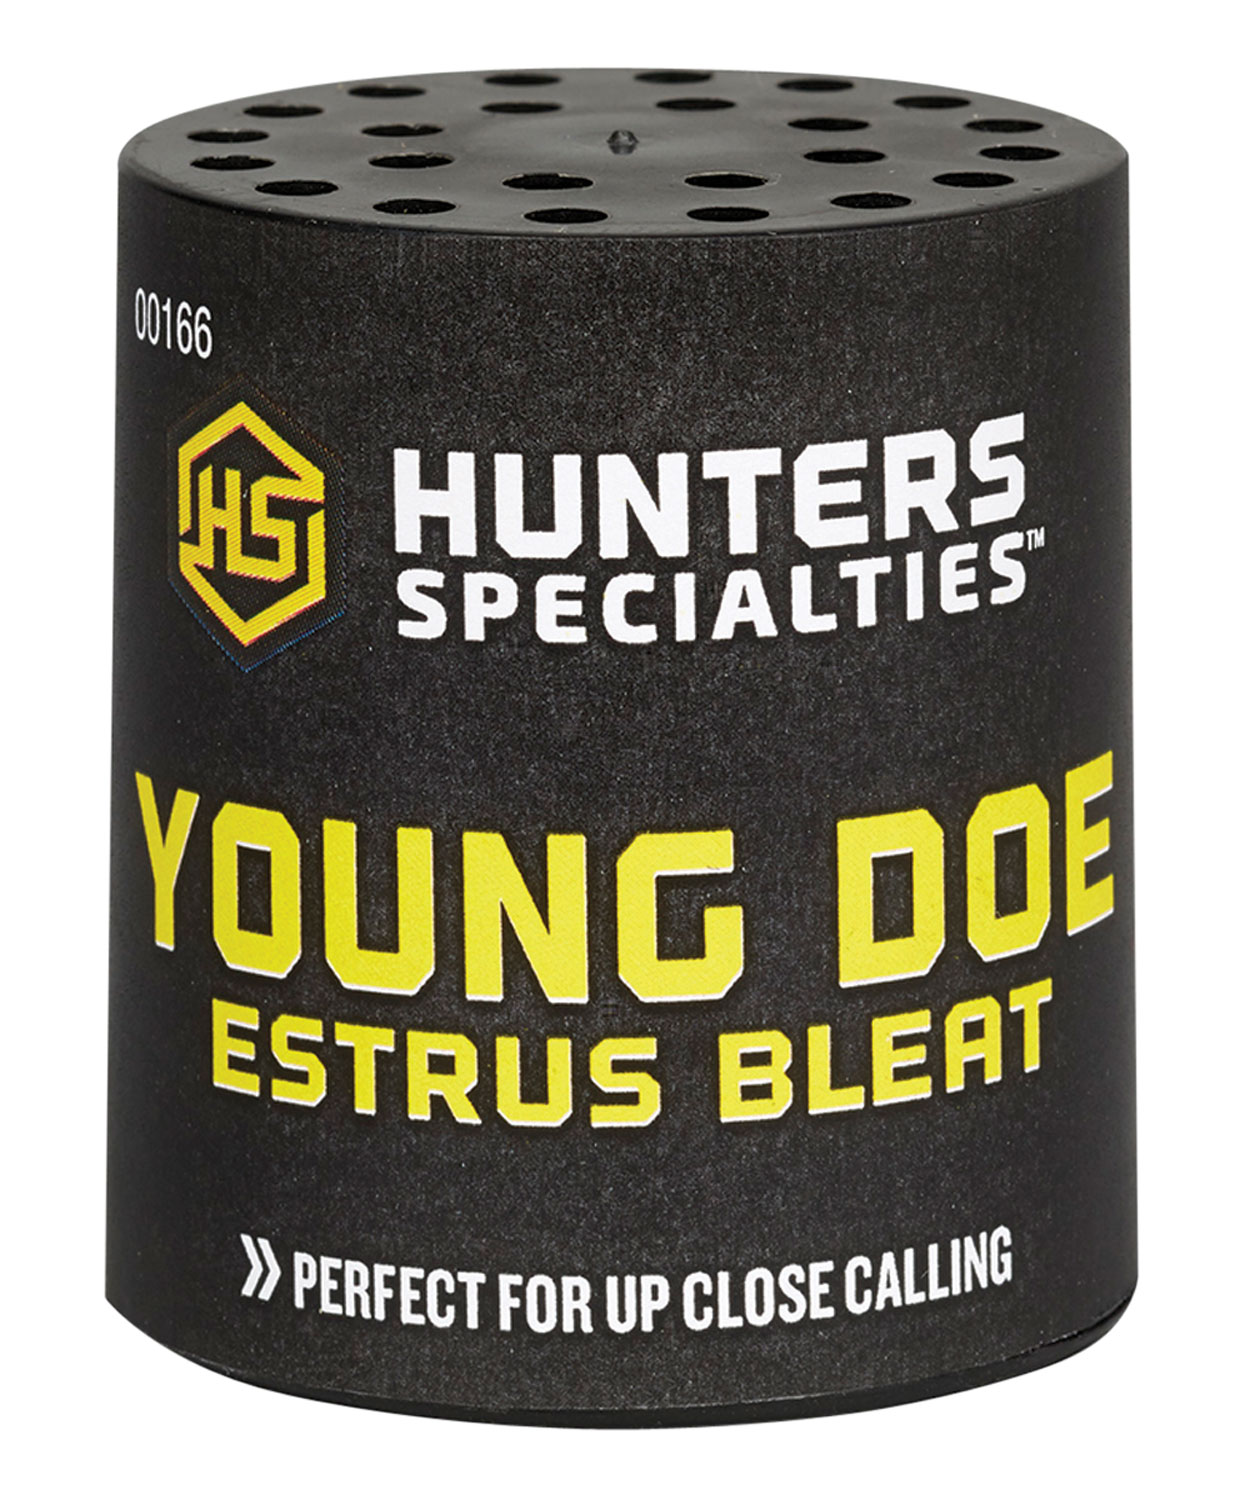 Hunters Specialties 00166 Young Doe Estrus Bleat Can Call | 021291001668